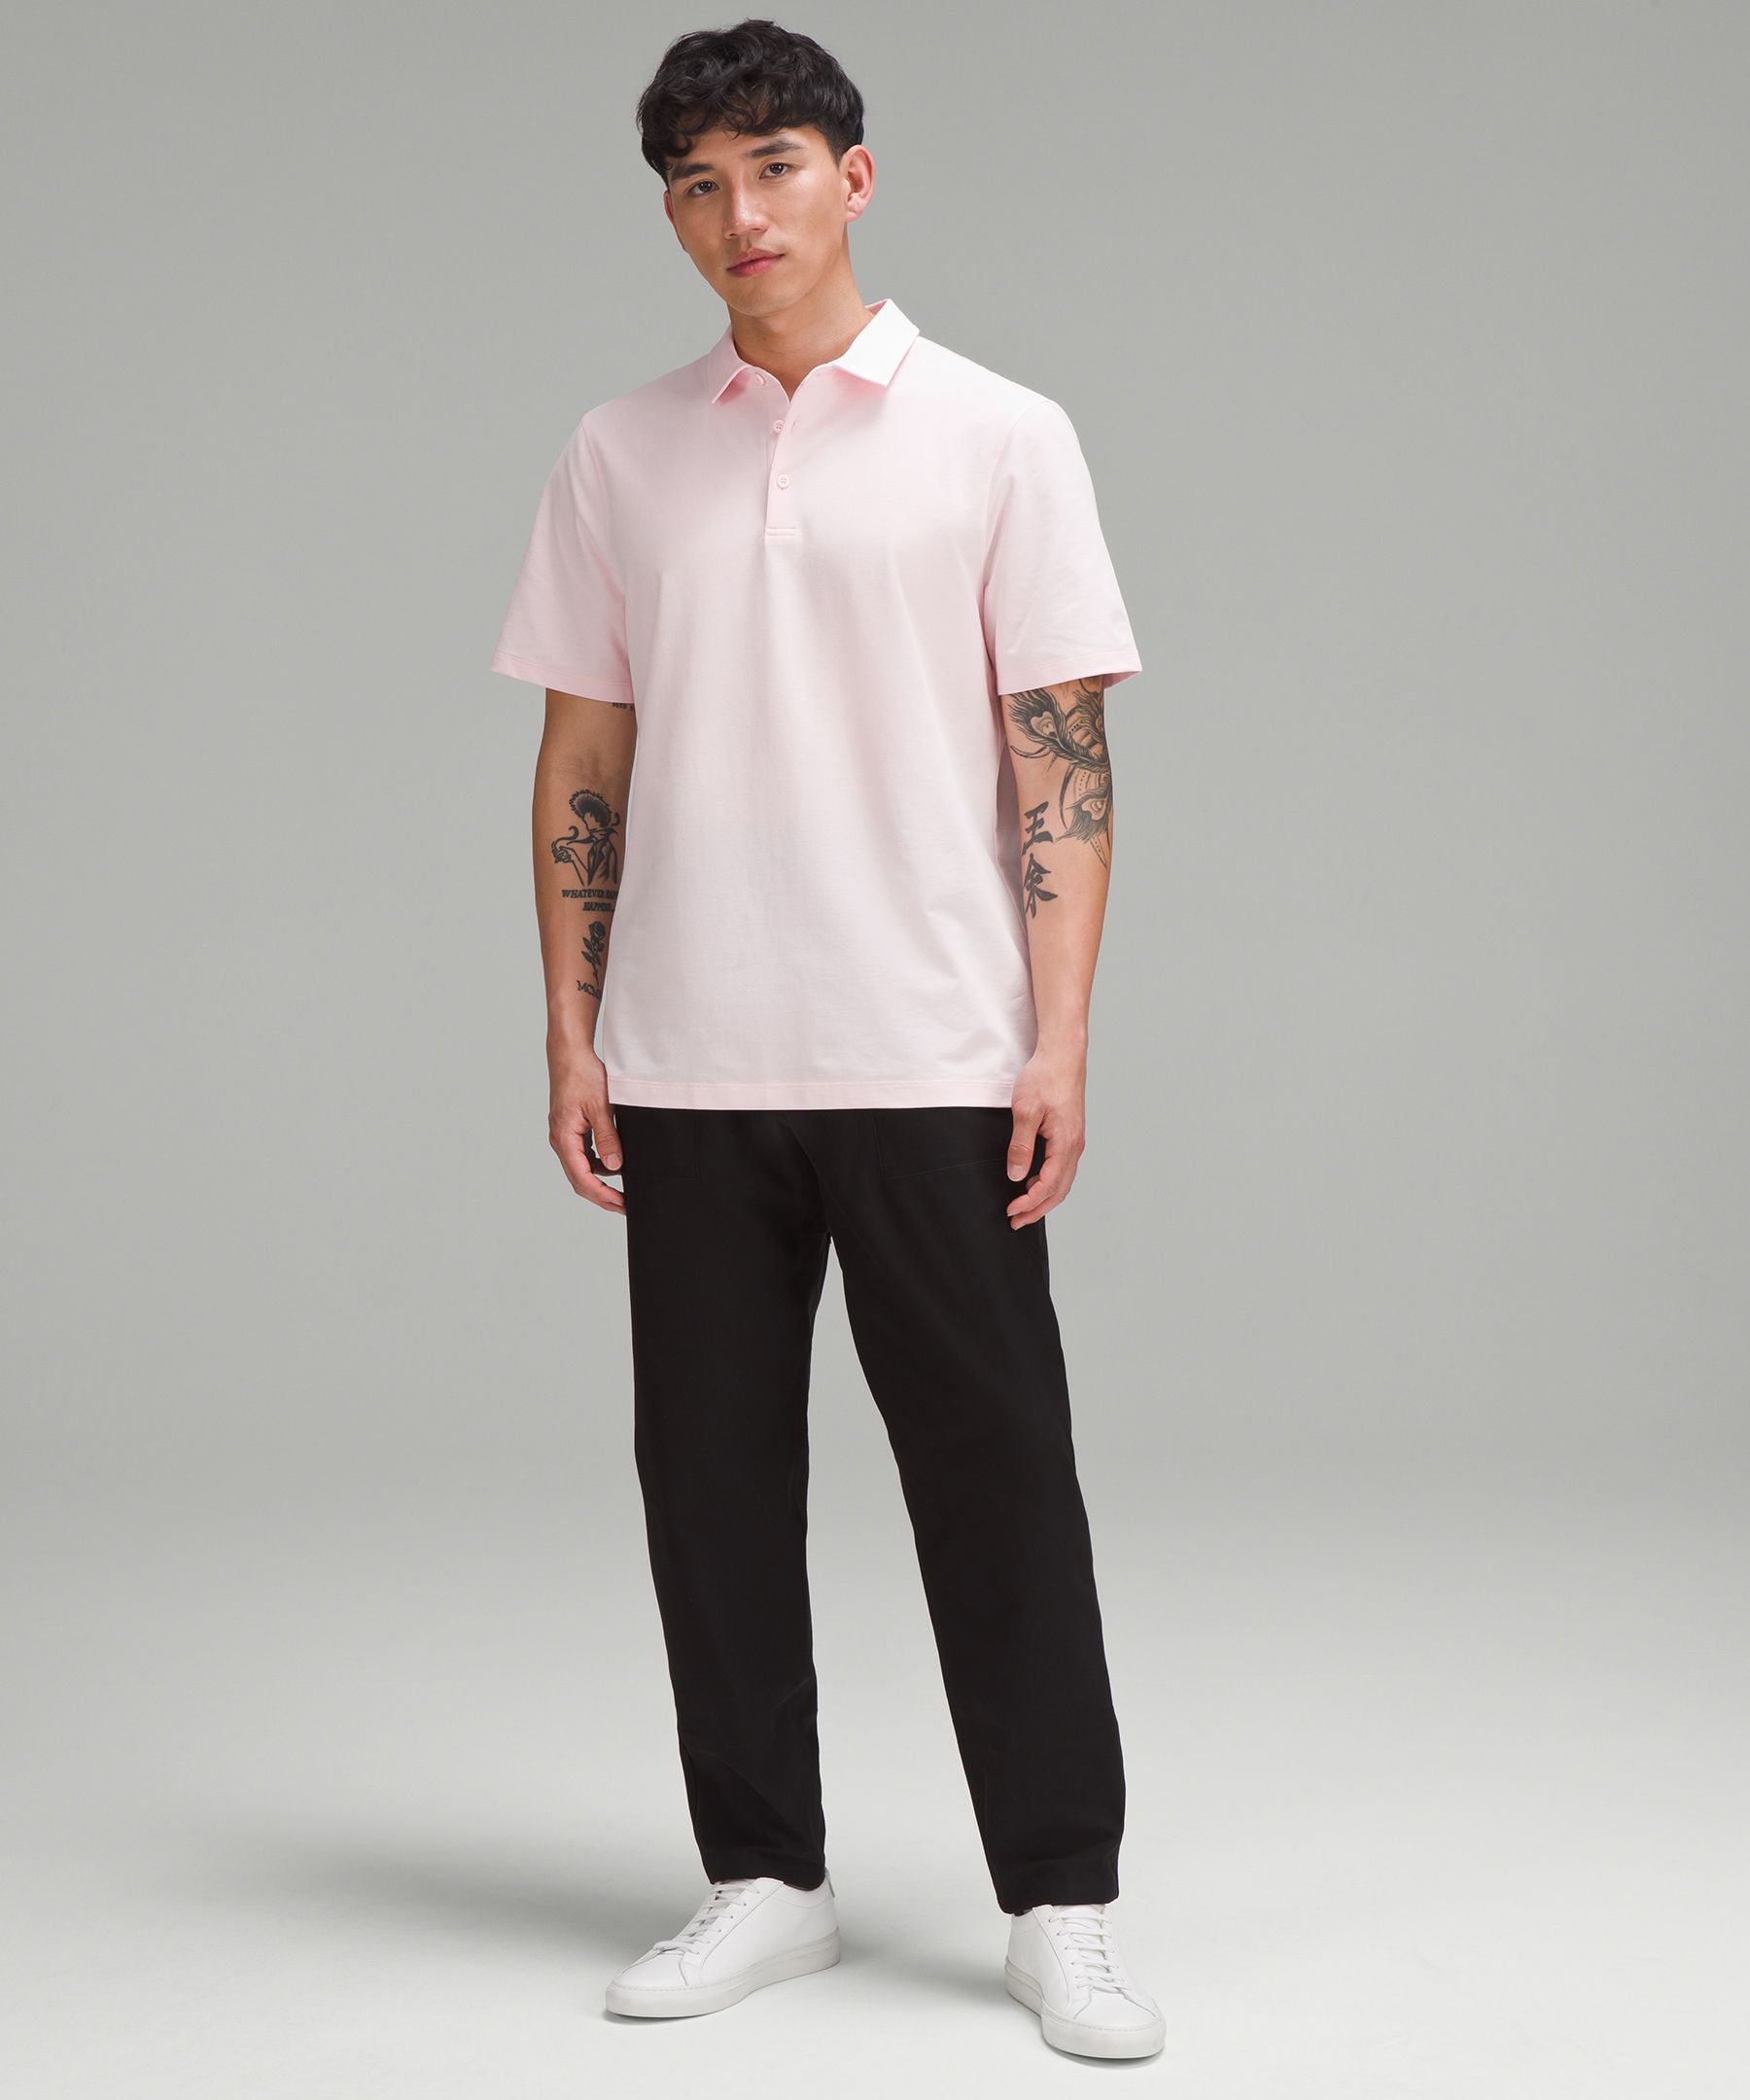 Evolution Short-Sleeve Polo Shirt *Oxford | Men's Short Sleeve Shirts & Tee's